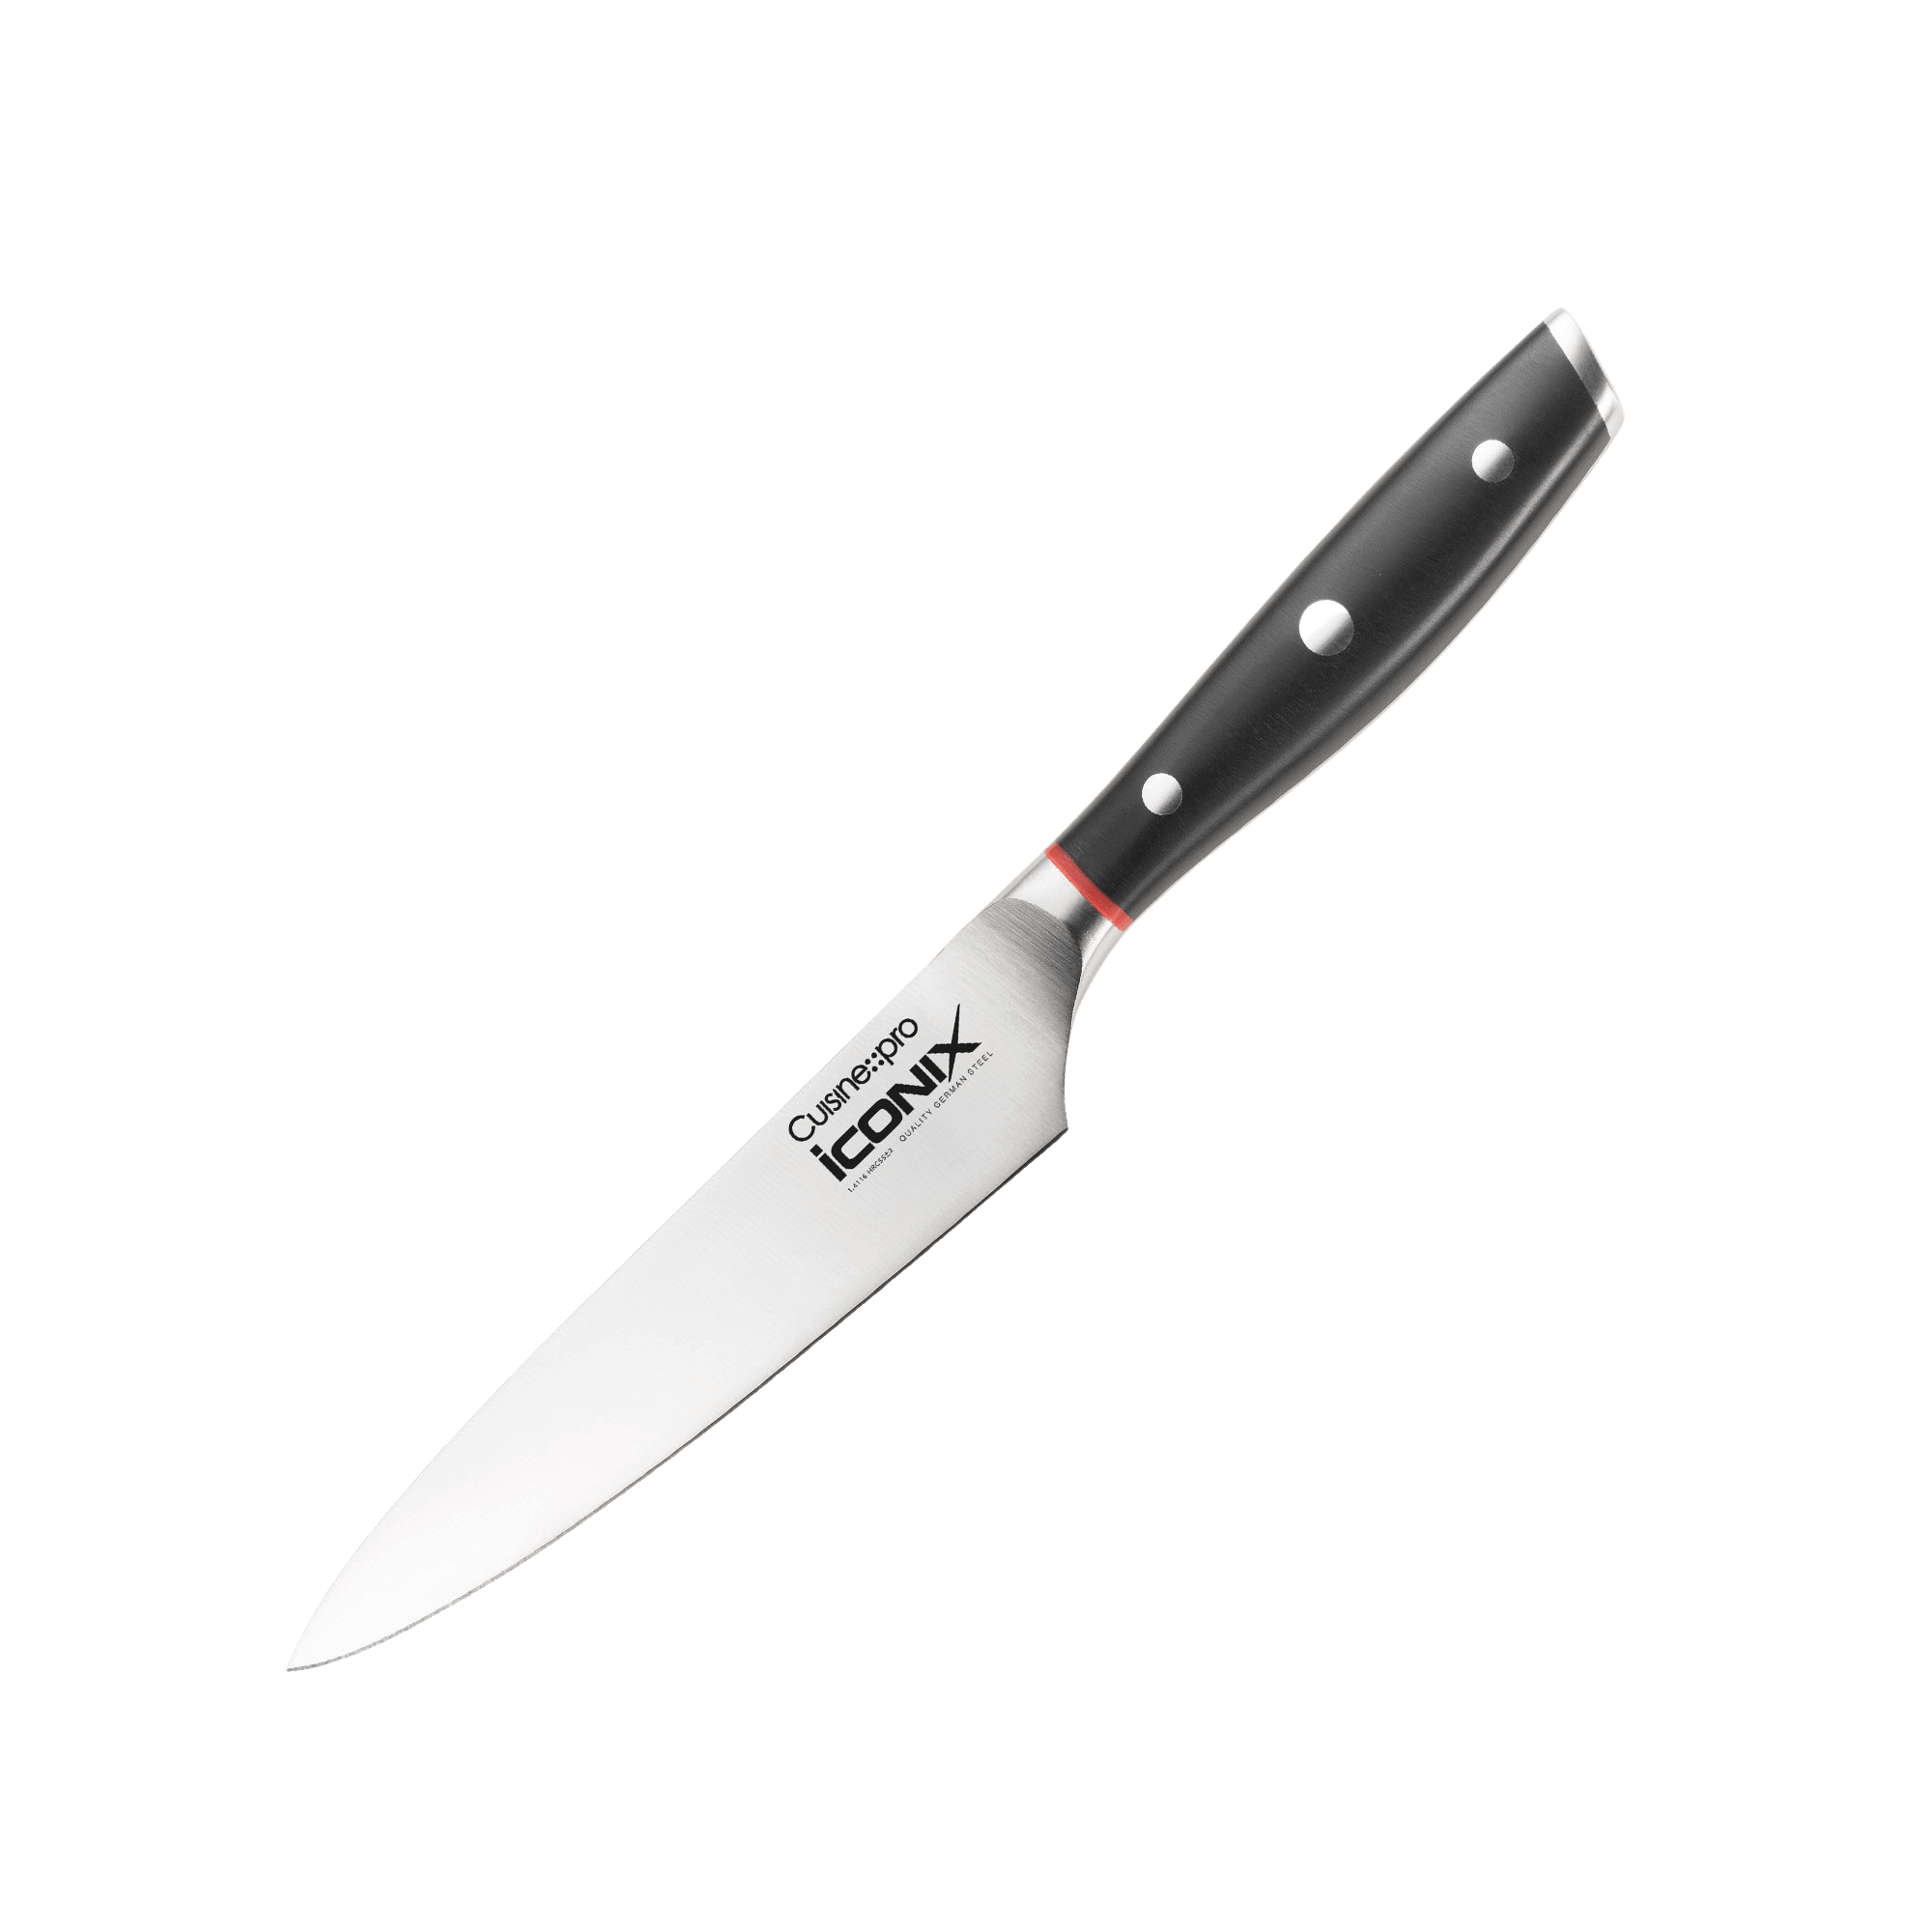 Cuisine::pro® iconiX® Utility Knife 12.5cm 5in